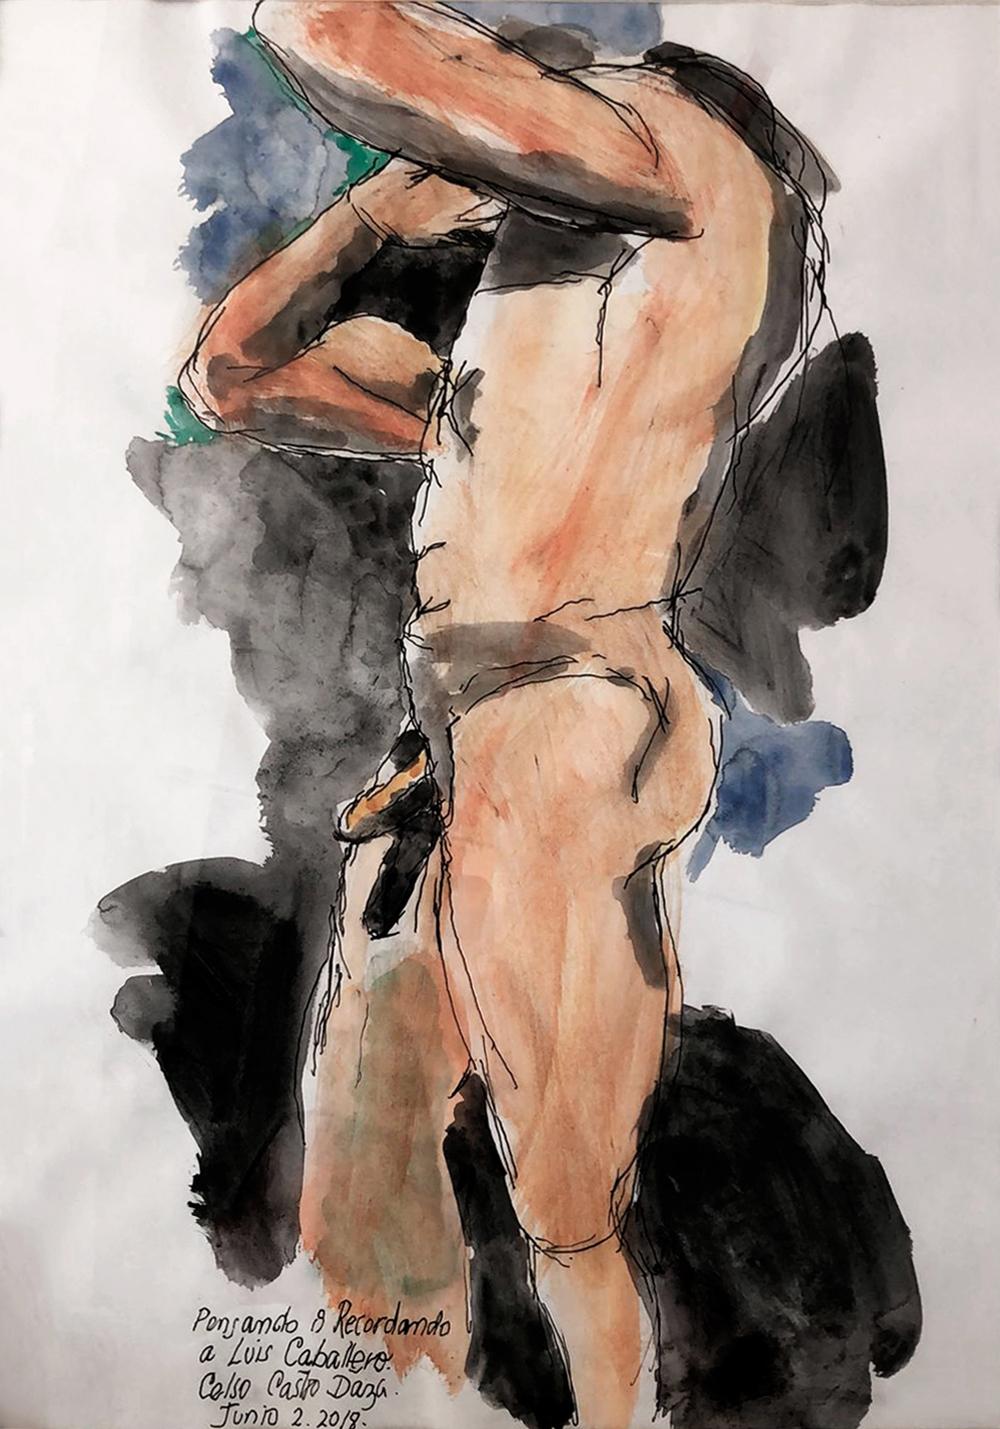 Figurative Art Celso José Castro Daza - Pensando & recordando a Luis Caballero, aquarelle d'un nu sur papier